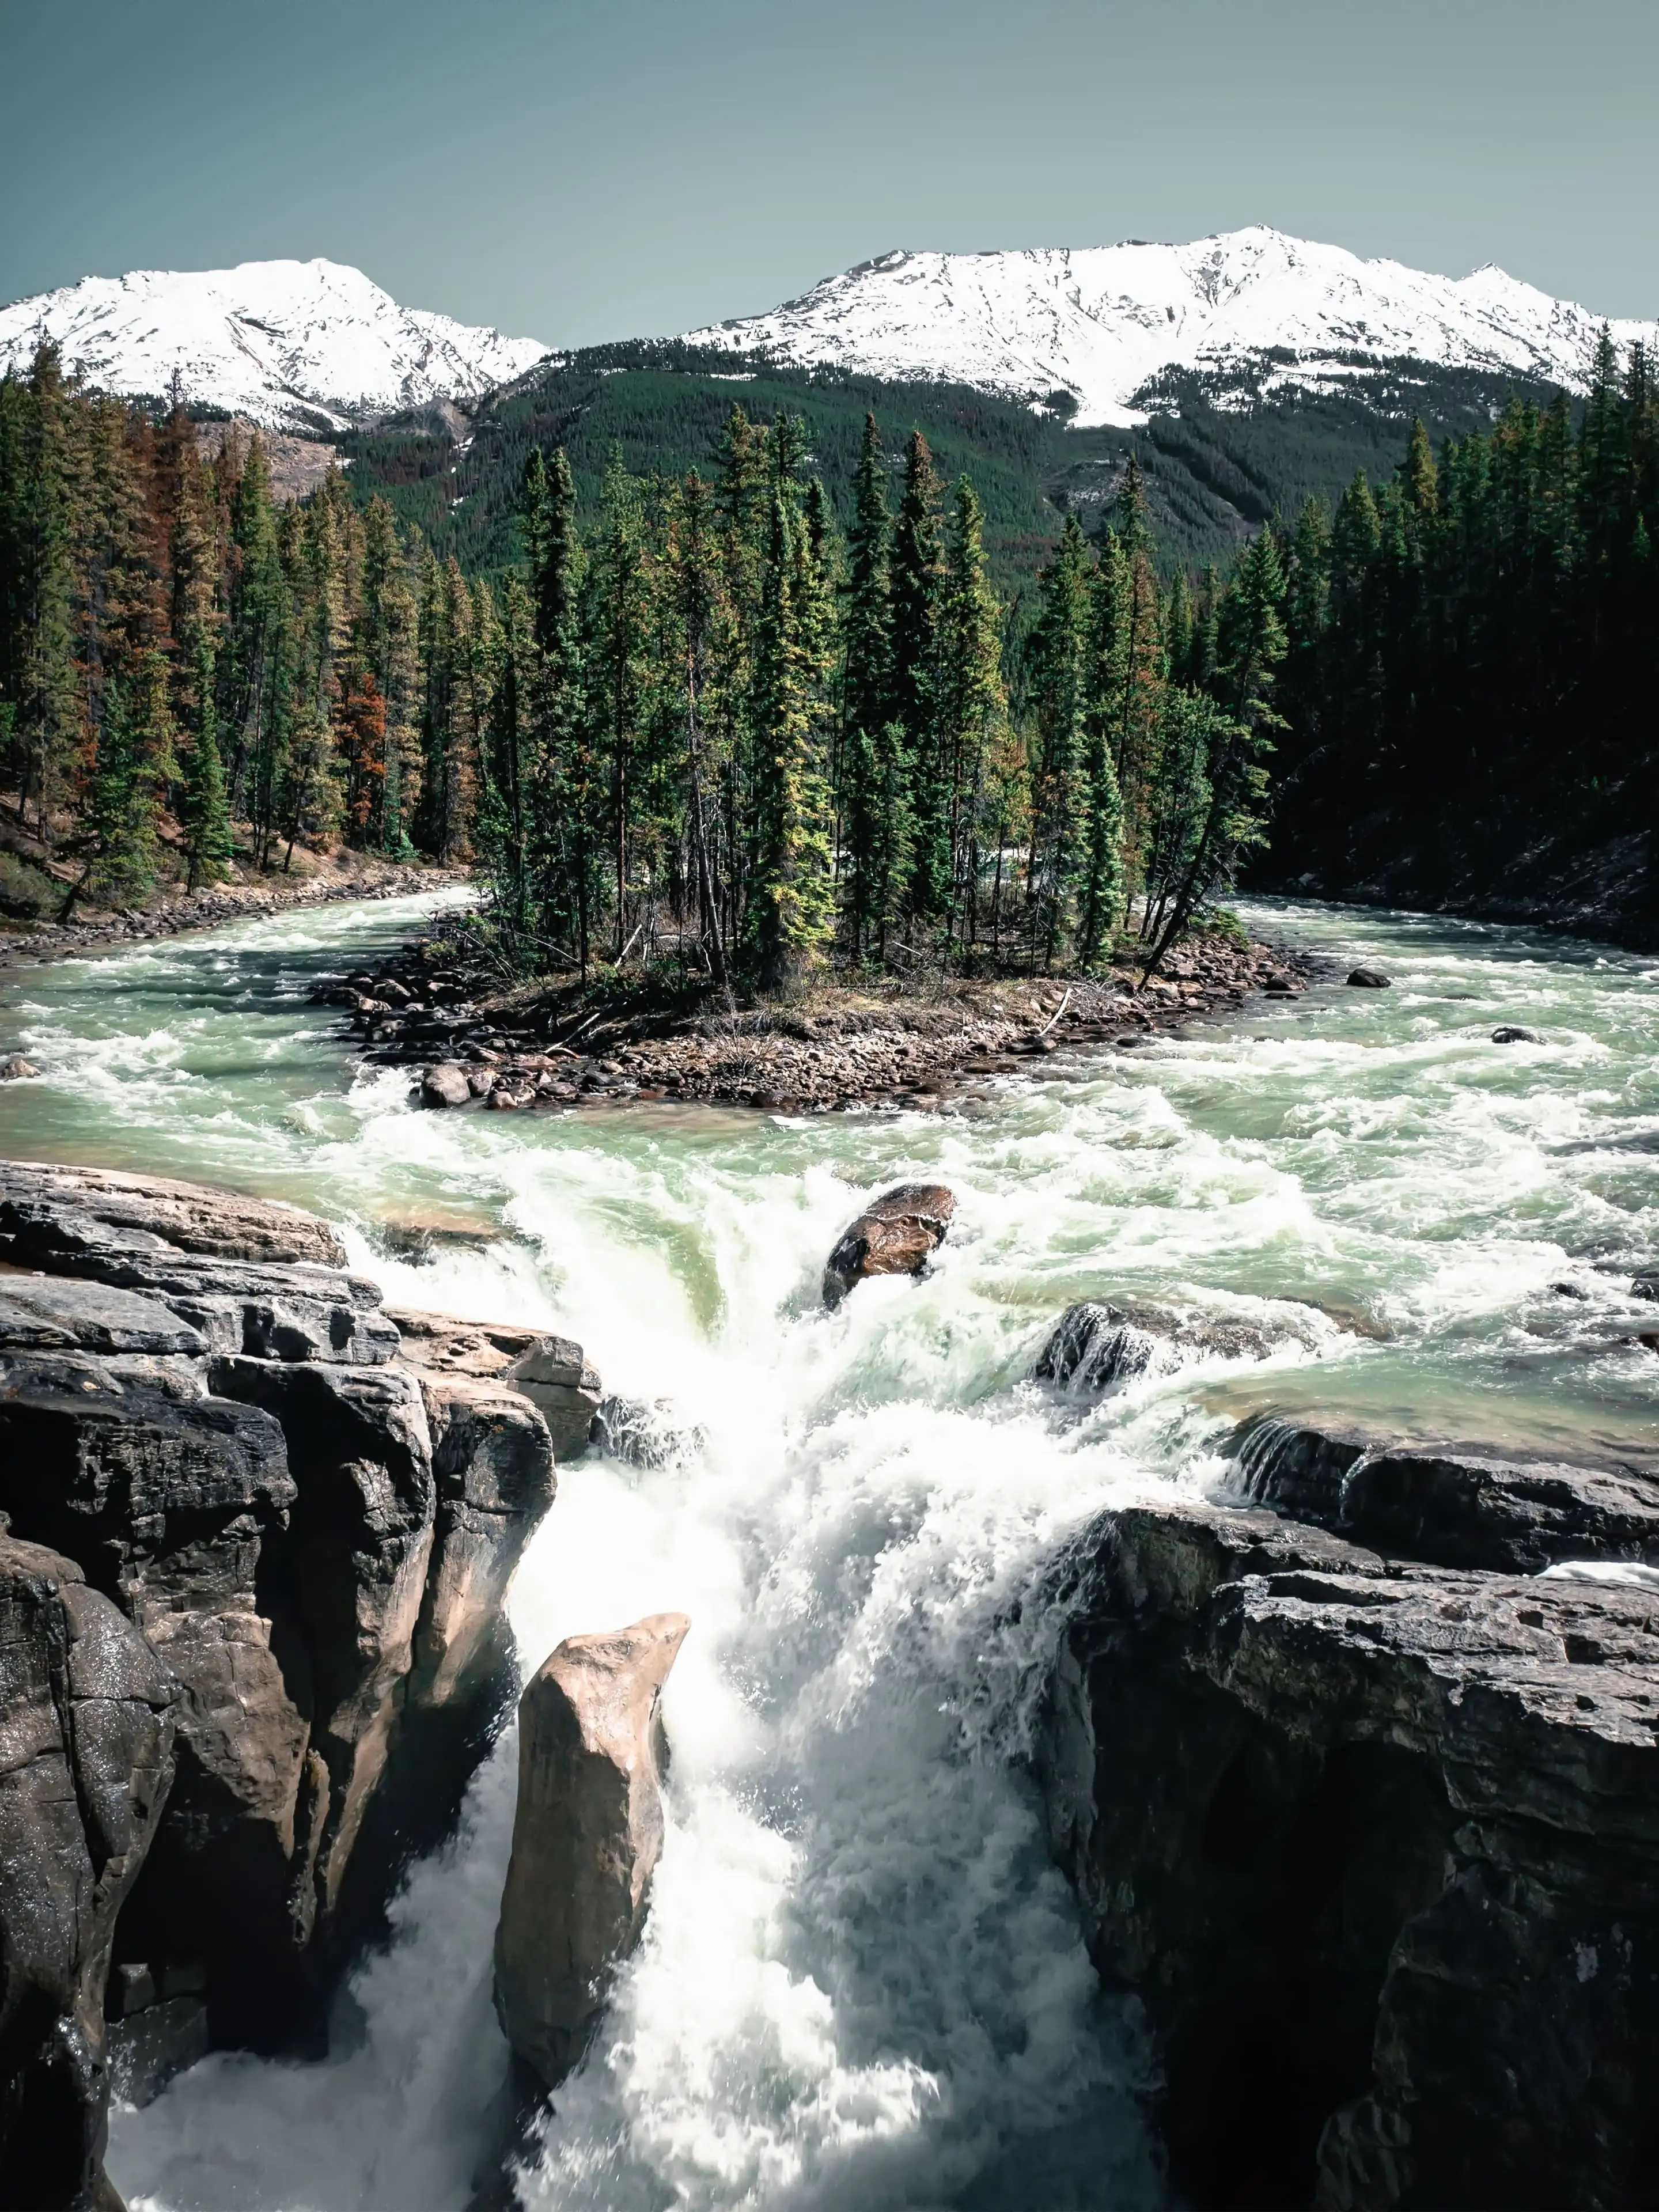 20 River Pictures  Download Free Images on Unsplash